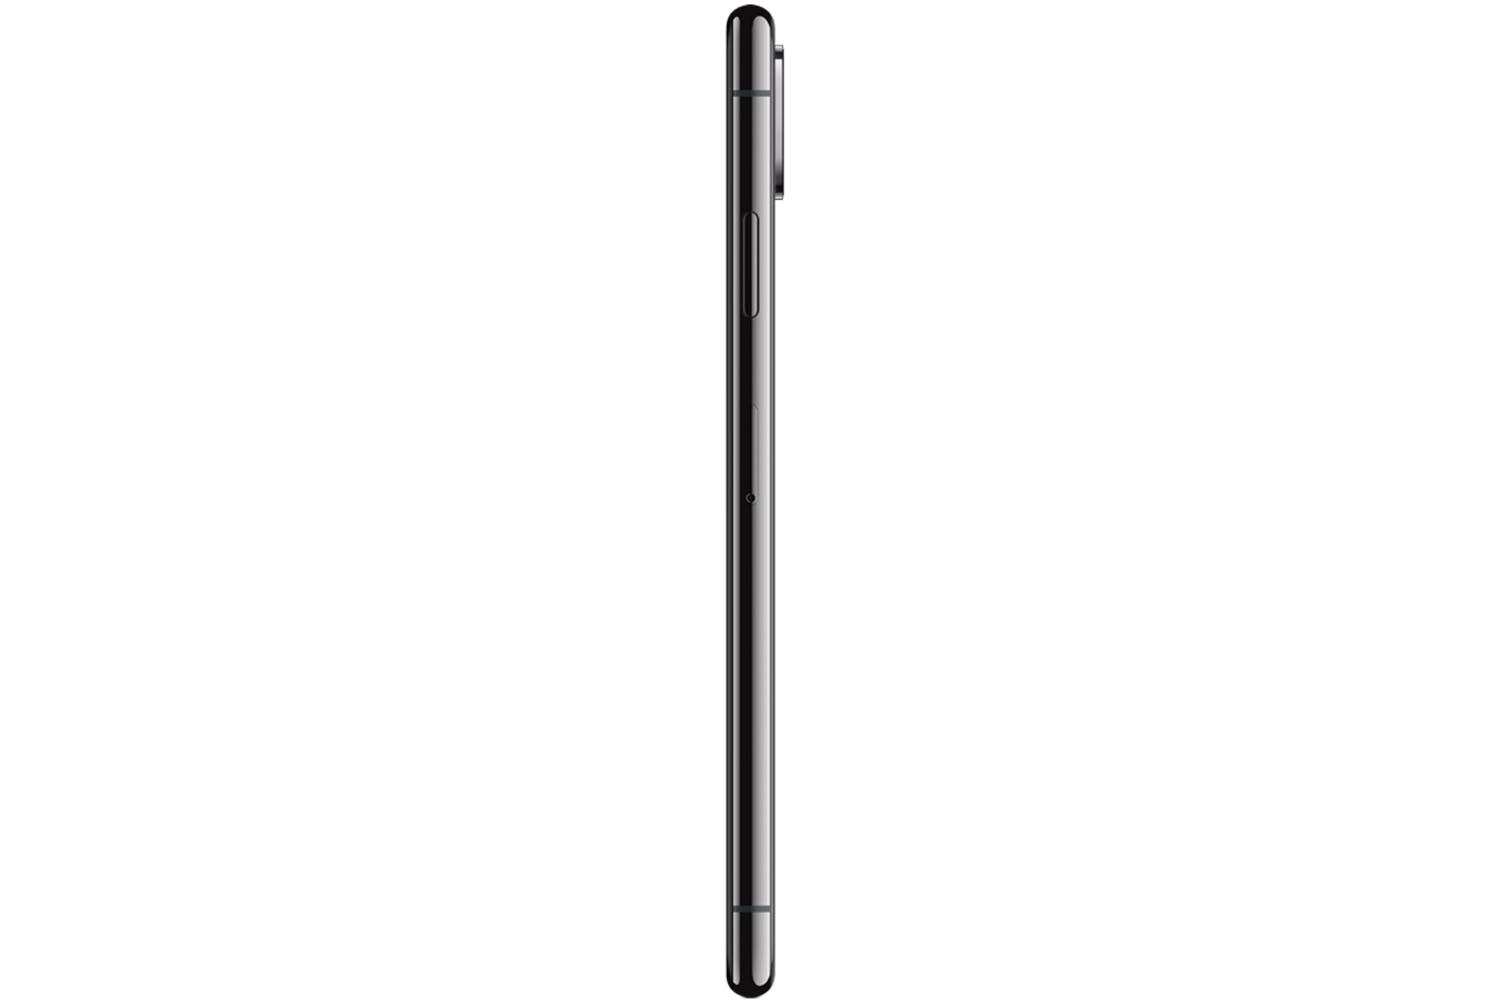 Apple iPhone XS Max 64GB Space Grey (MT502)